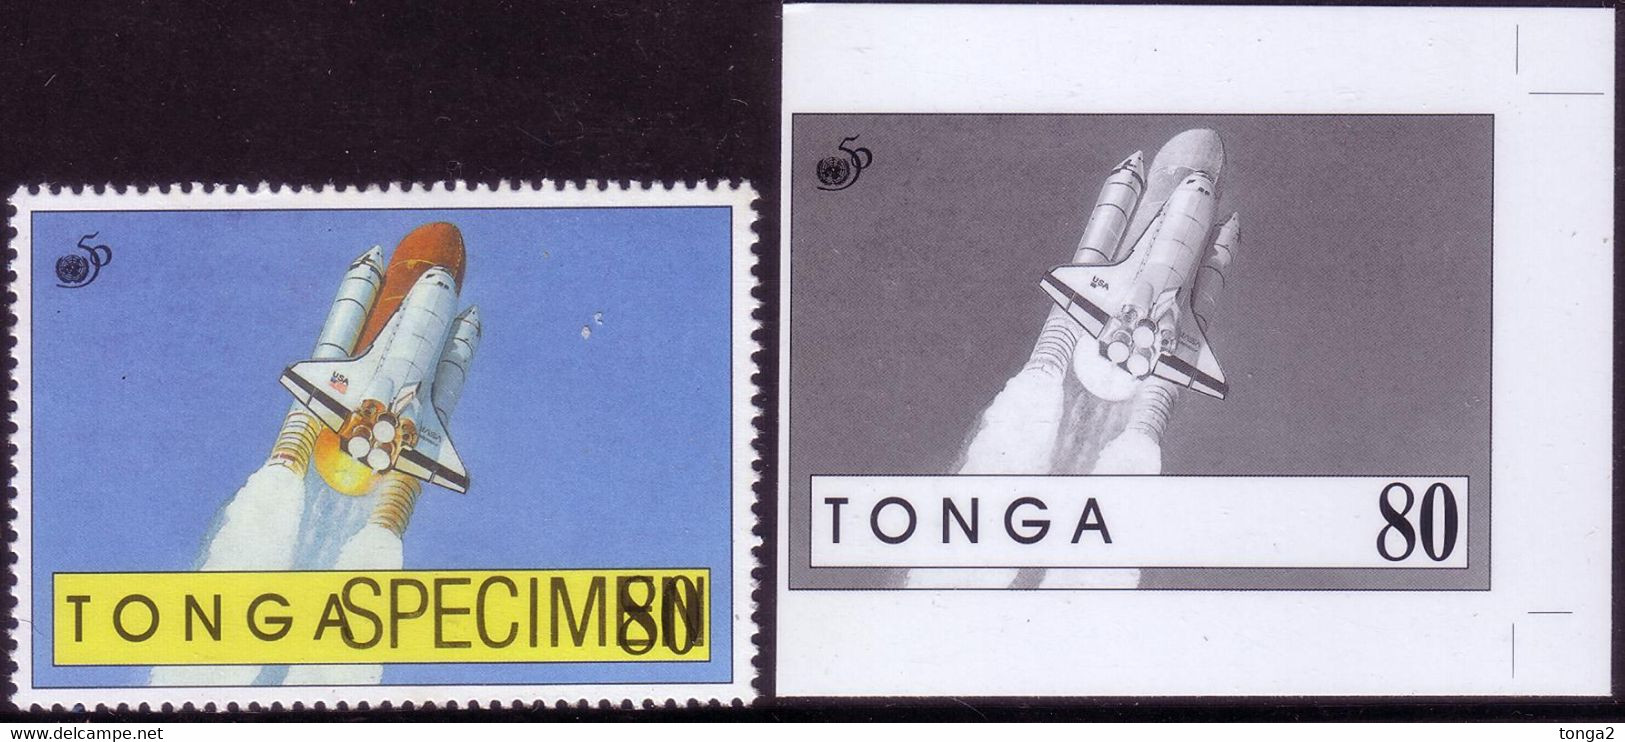 Tonga 1995 - Space Shuttle - Proof + Specimen - Oceania